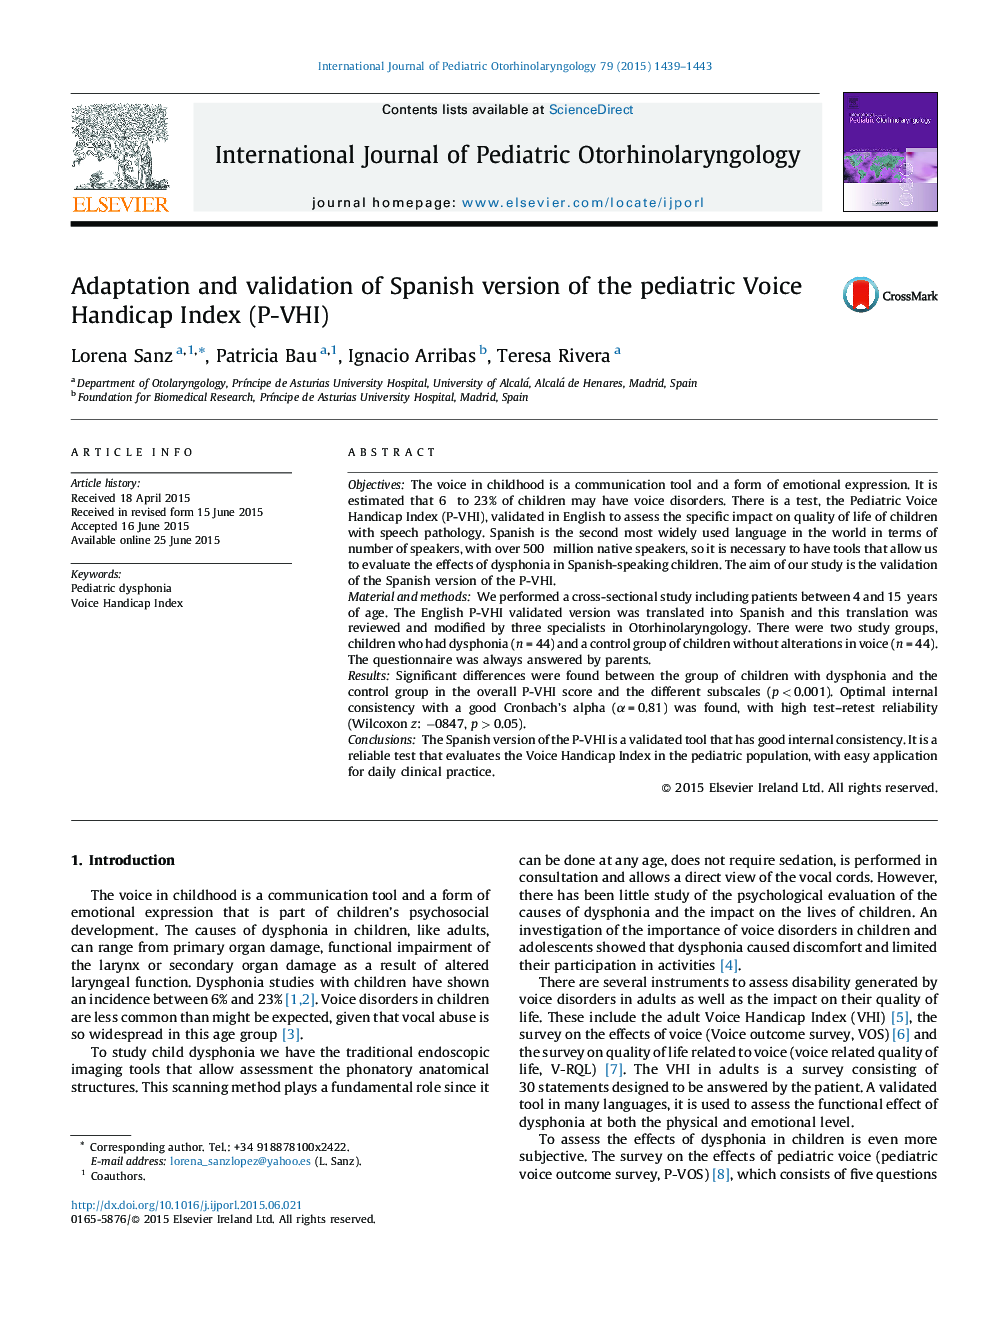 Adaptation and validation of Spanish version of the pediatric Voice Handicap Index (P-VHI)